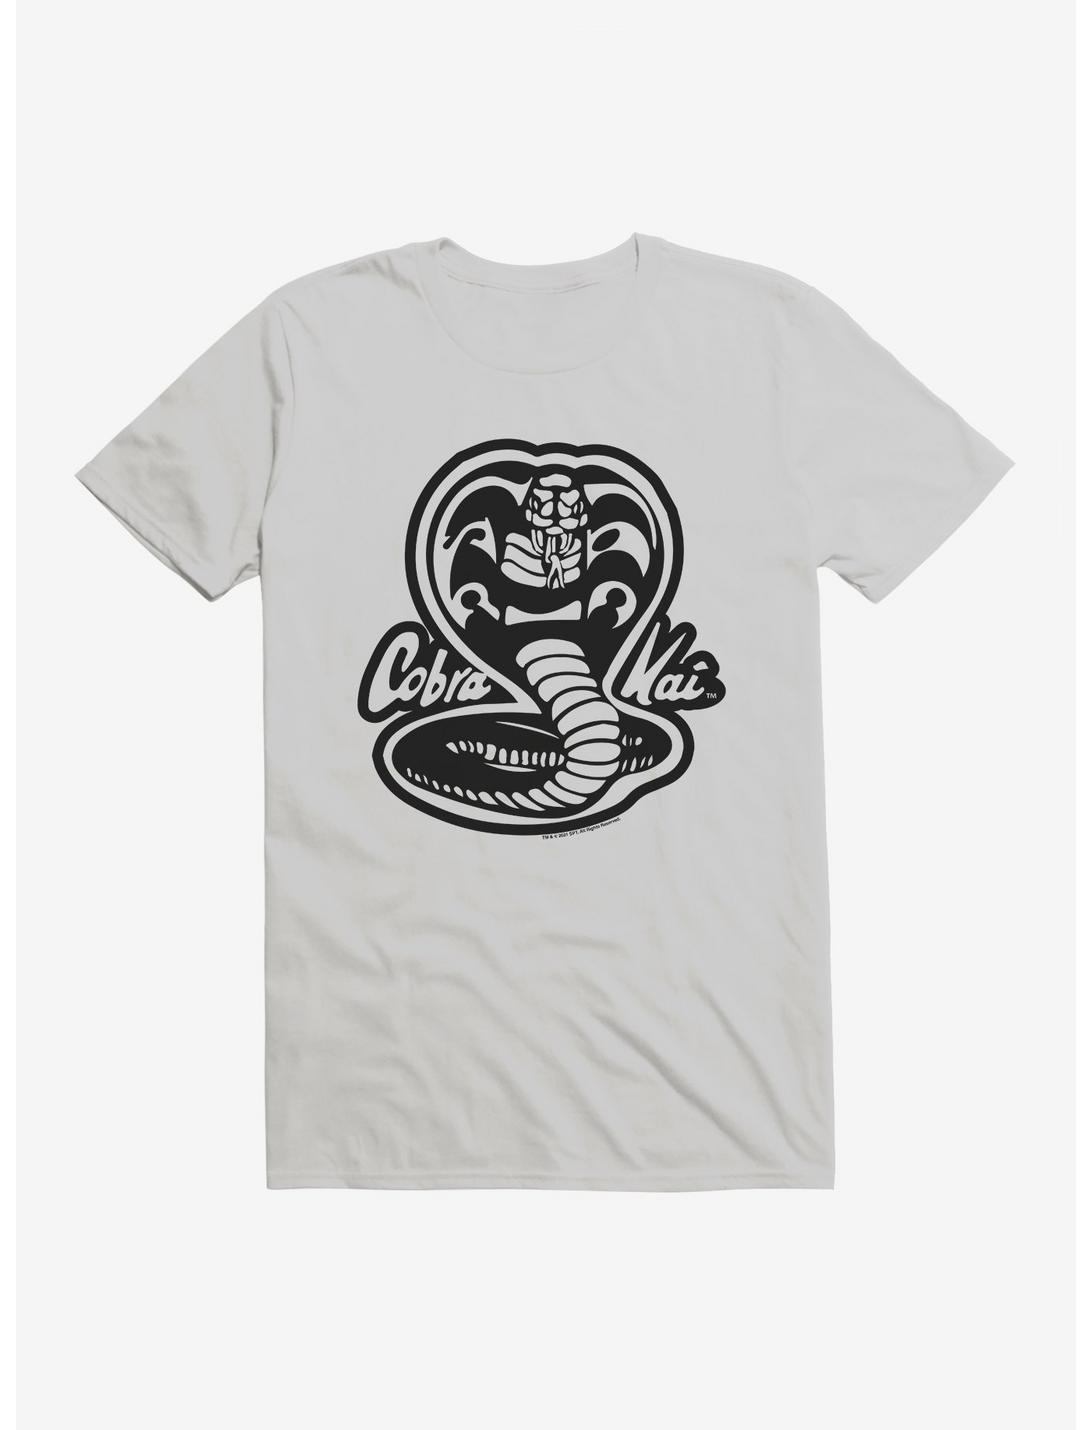 Cobra Kai Black And White Logo T-Shirt, SILVER, hi-res